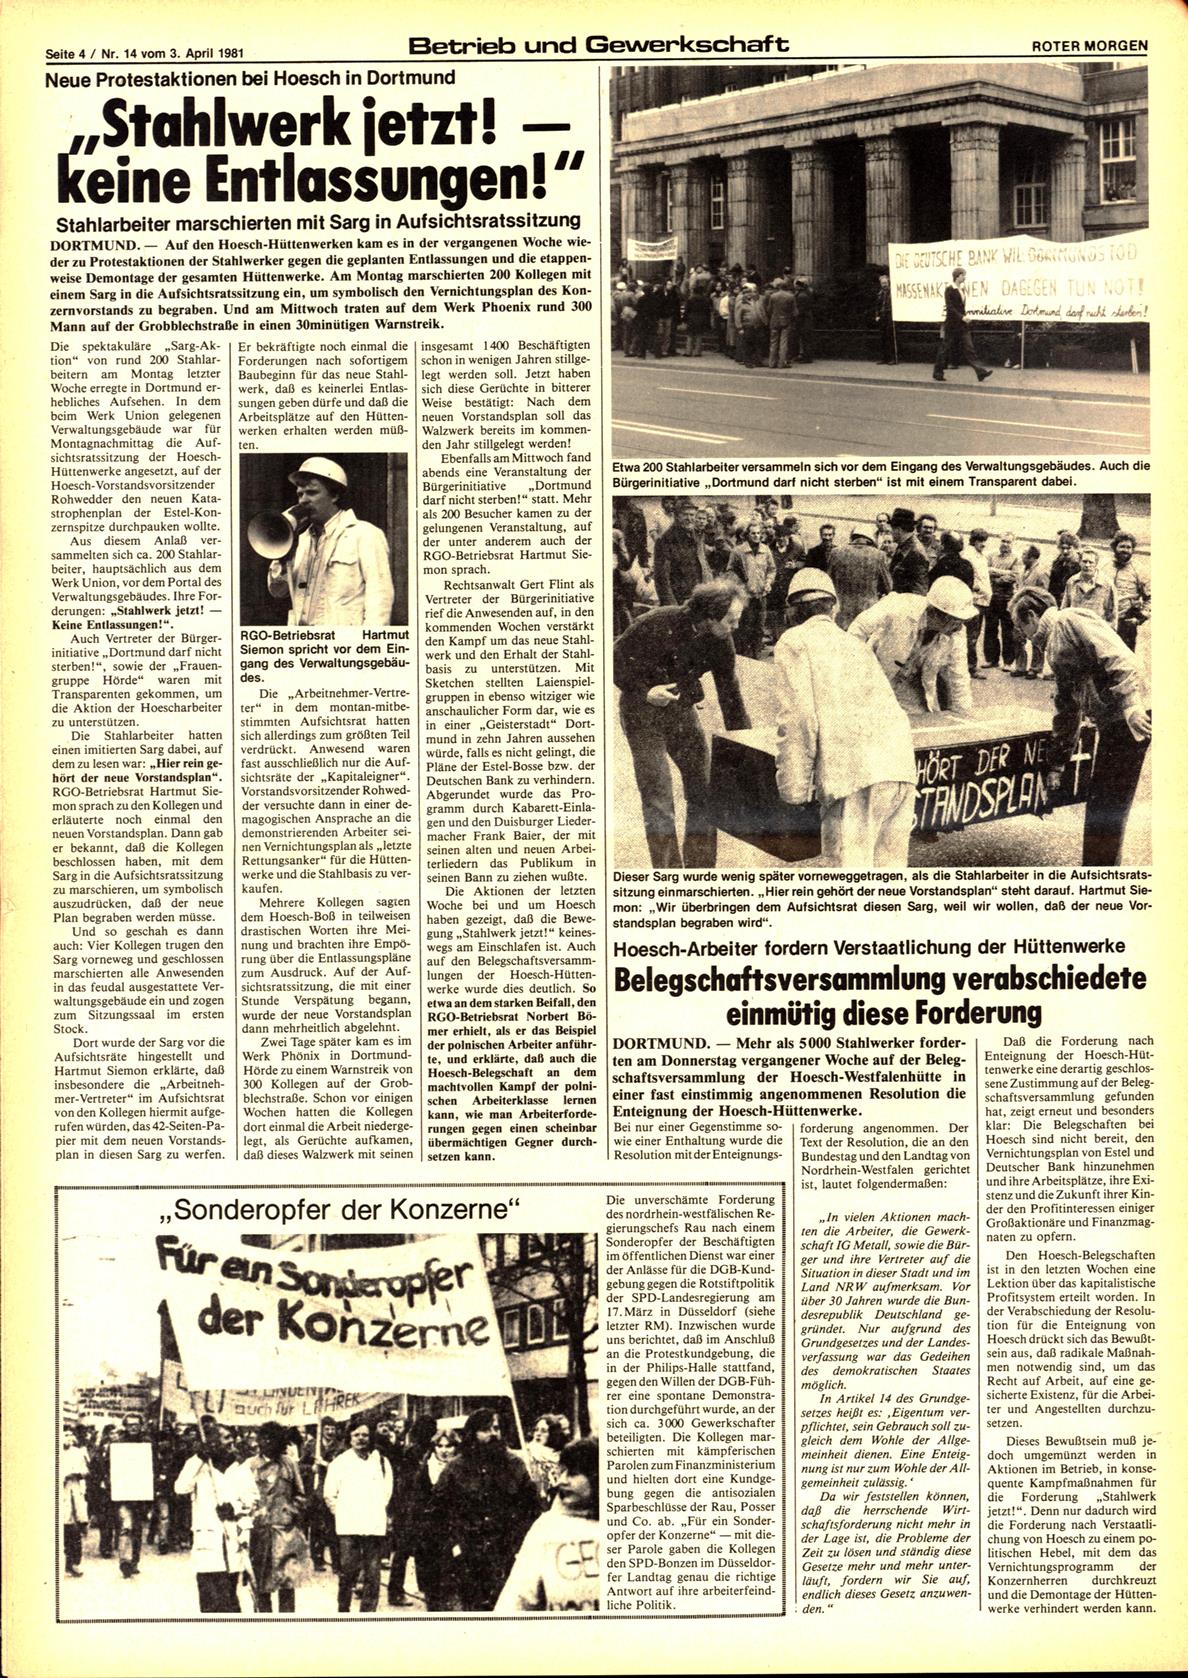 Roter Morgen, 15. Jg., 3. April 1981, Nr. 14, Seite 4